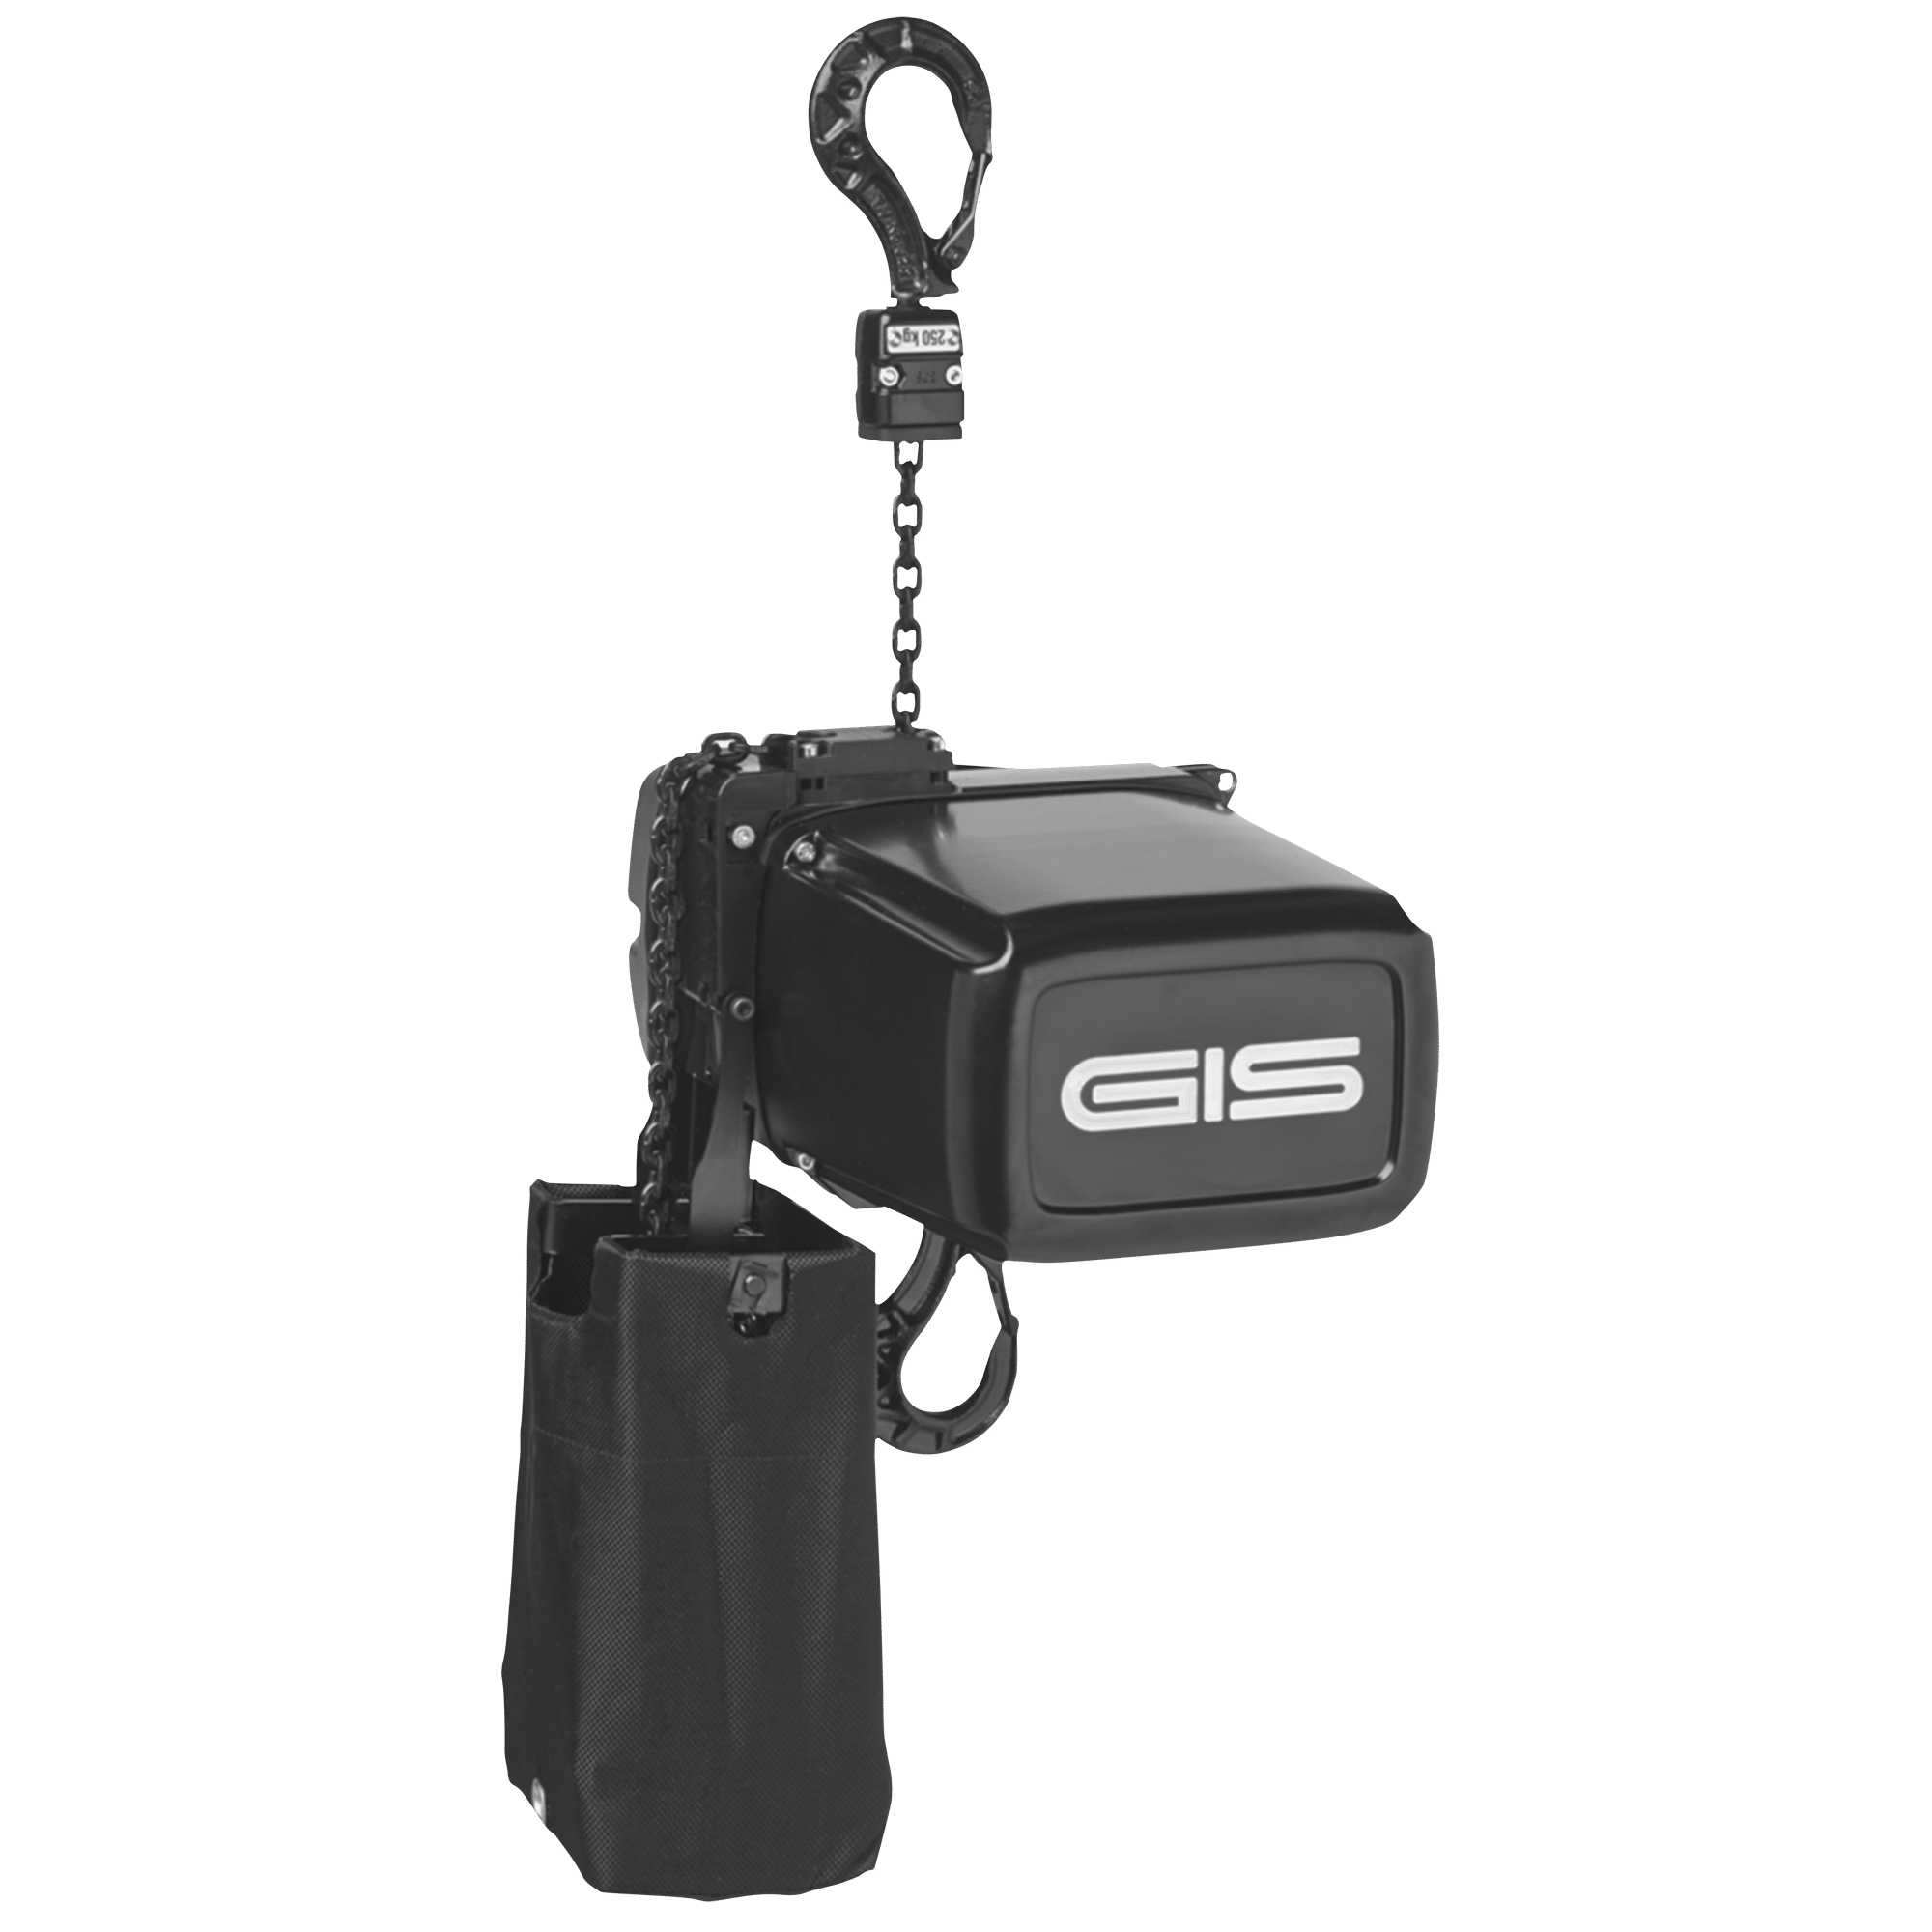 GIS Electric Chainhoist 250 kg - Onlinediscowinkel.nl